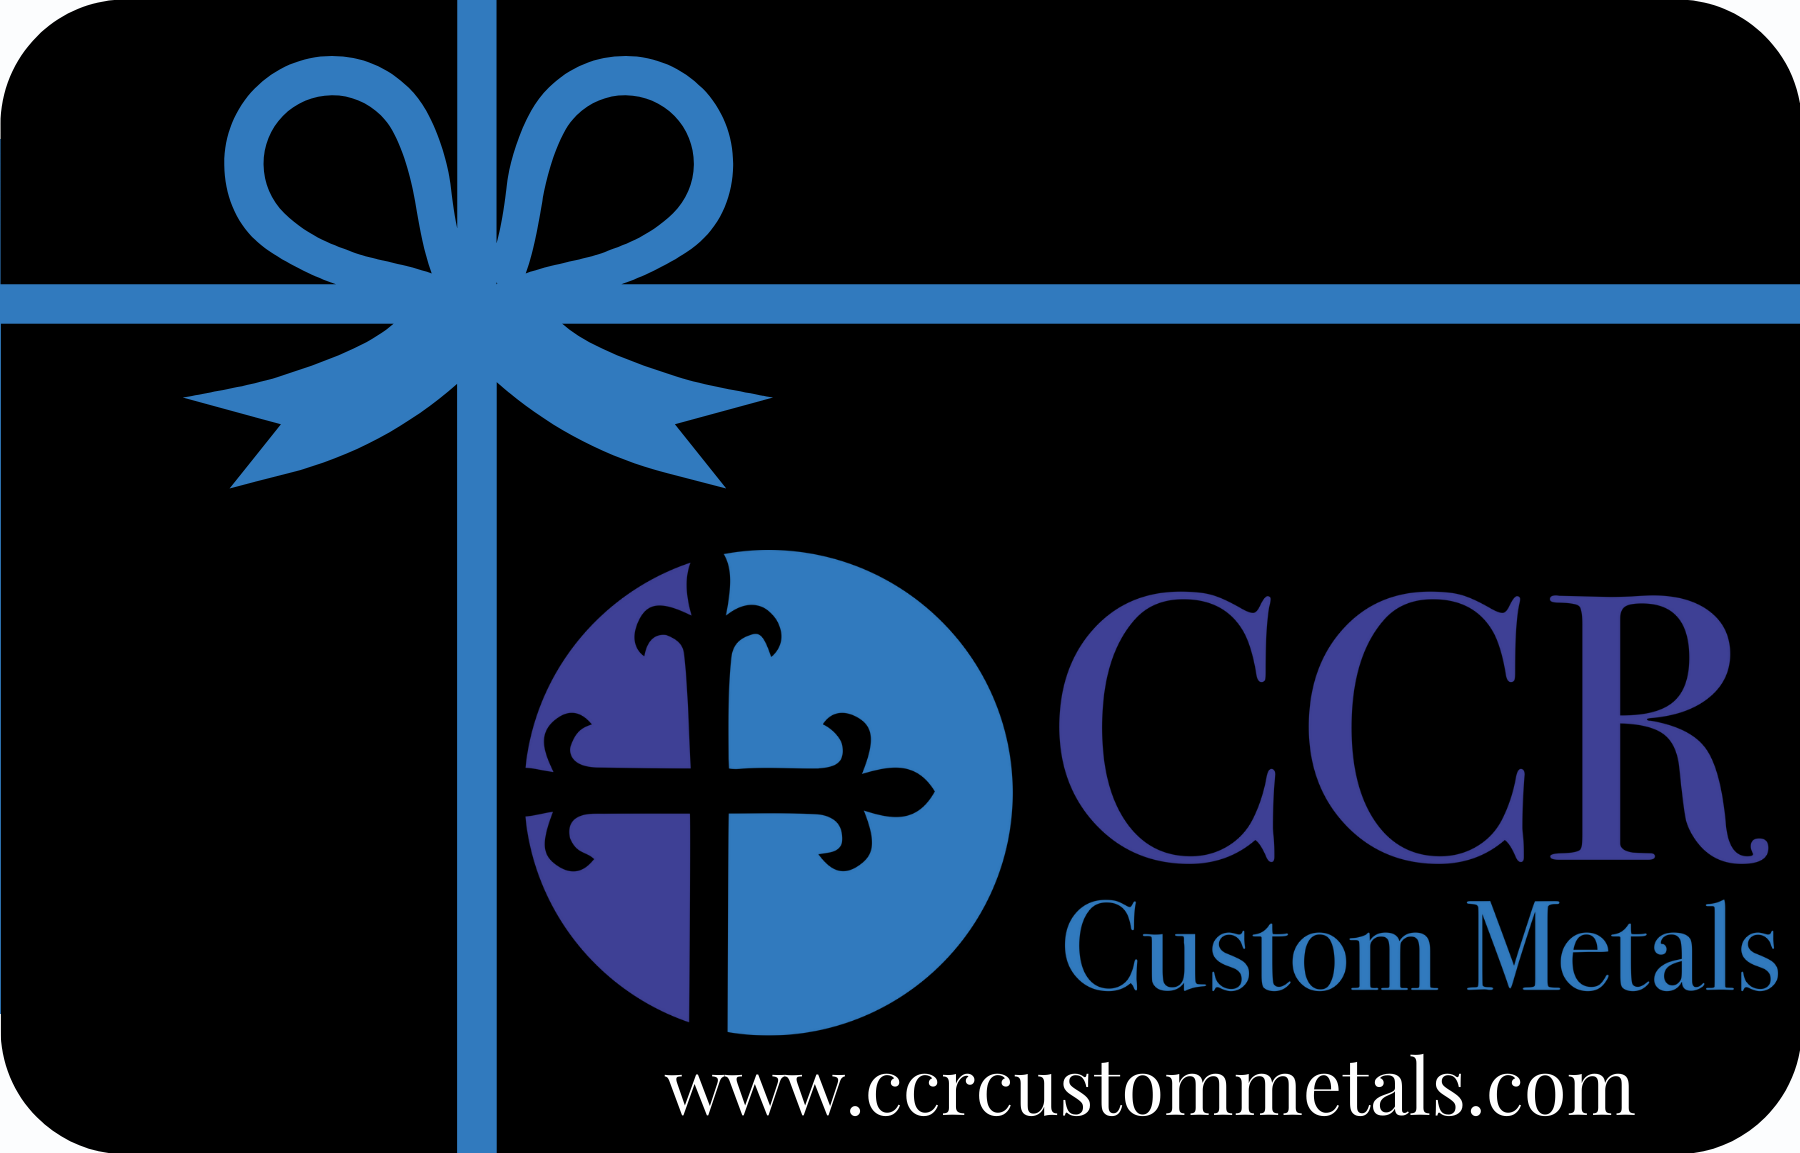 CCR Custom Metals  Gift Card